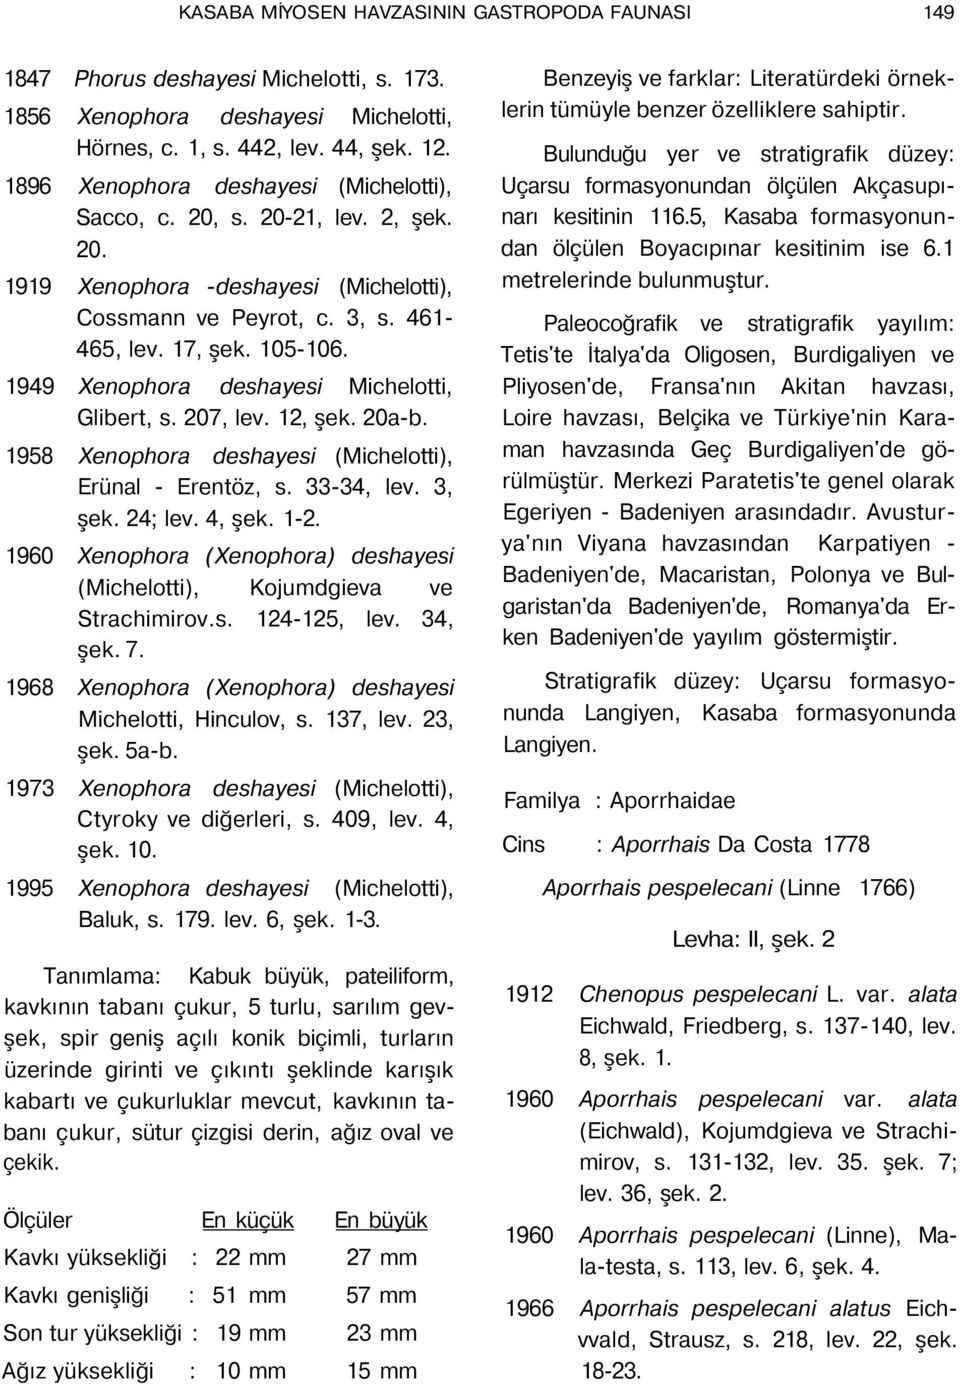 1949 Xenophora deshayesi Michelotti, Glibert, s. 207, lev. 12, şek. 20a-b. 1958 Xenophora deshayesi (Michelotti), Erünal - Erentöz, s. 33-34, lev. 3, şek. 24; lev. 4, şek. 1-2.